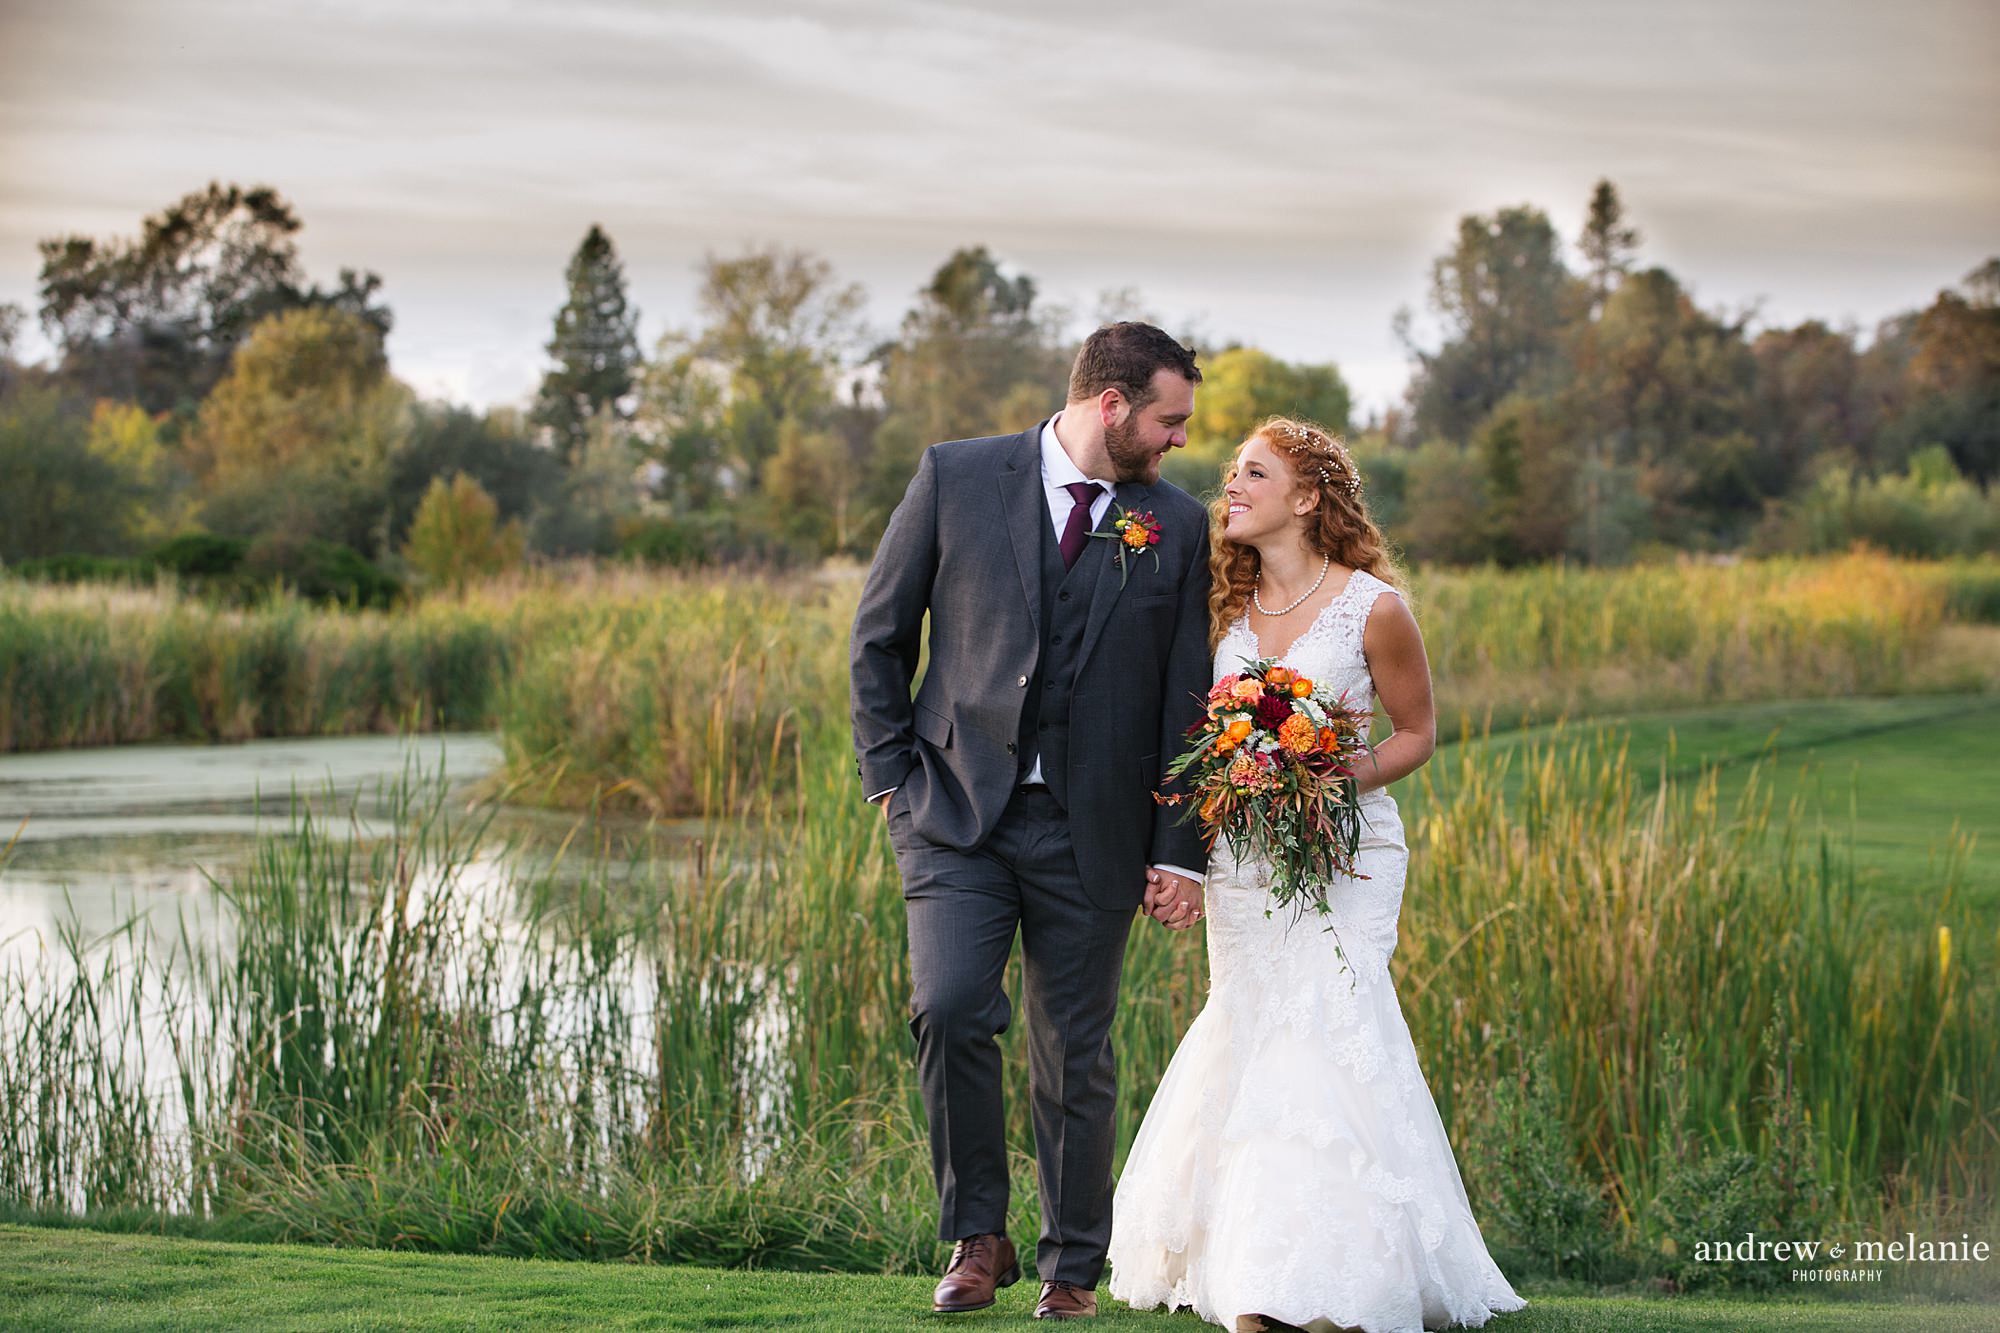 Andrew and Melanie Photography wedding highlights The Ridge Golf course Auburn, CA